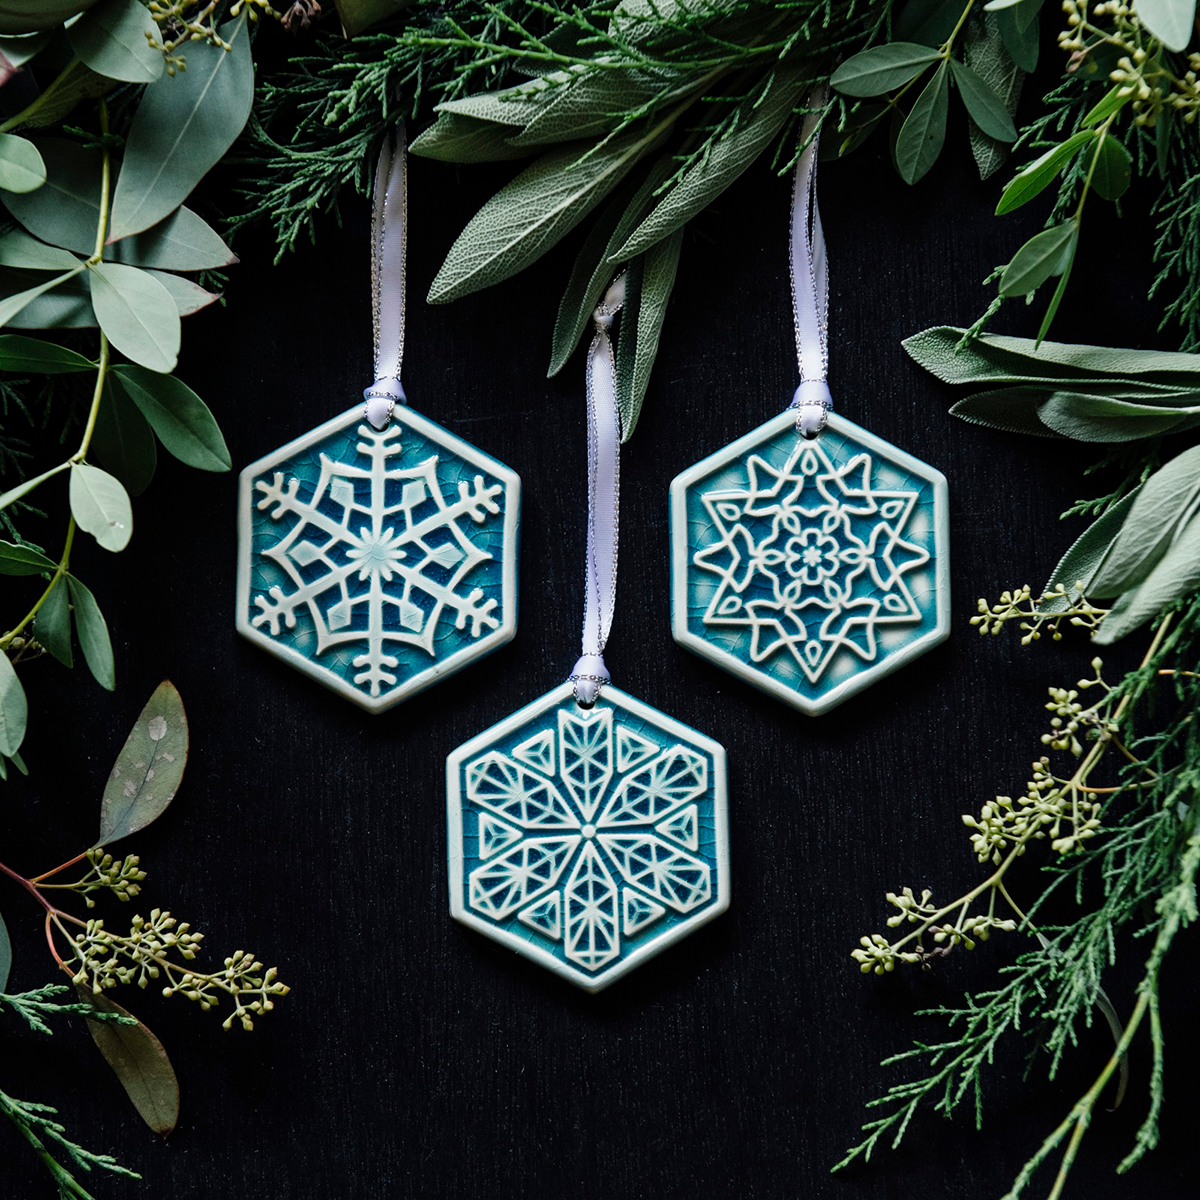 A set for three ceramic snowflake ornaments in a pale blue color. Each snowflake has a unique design.